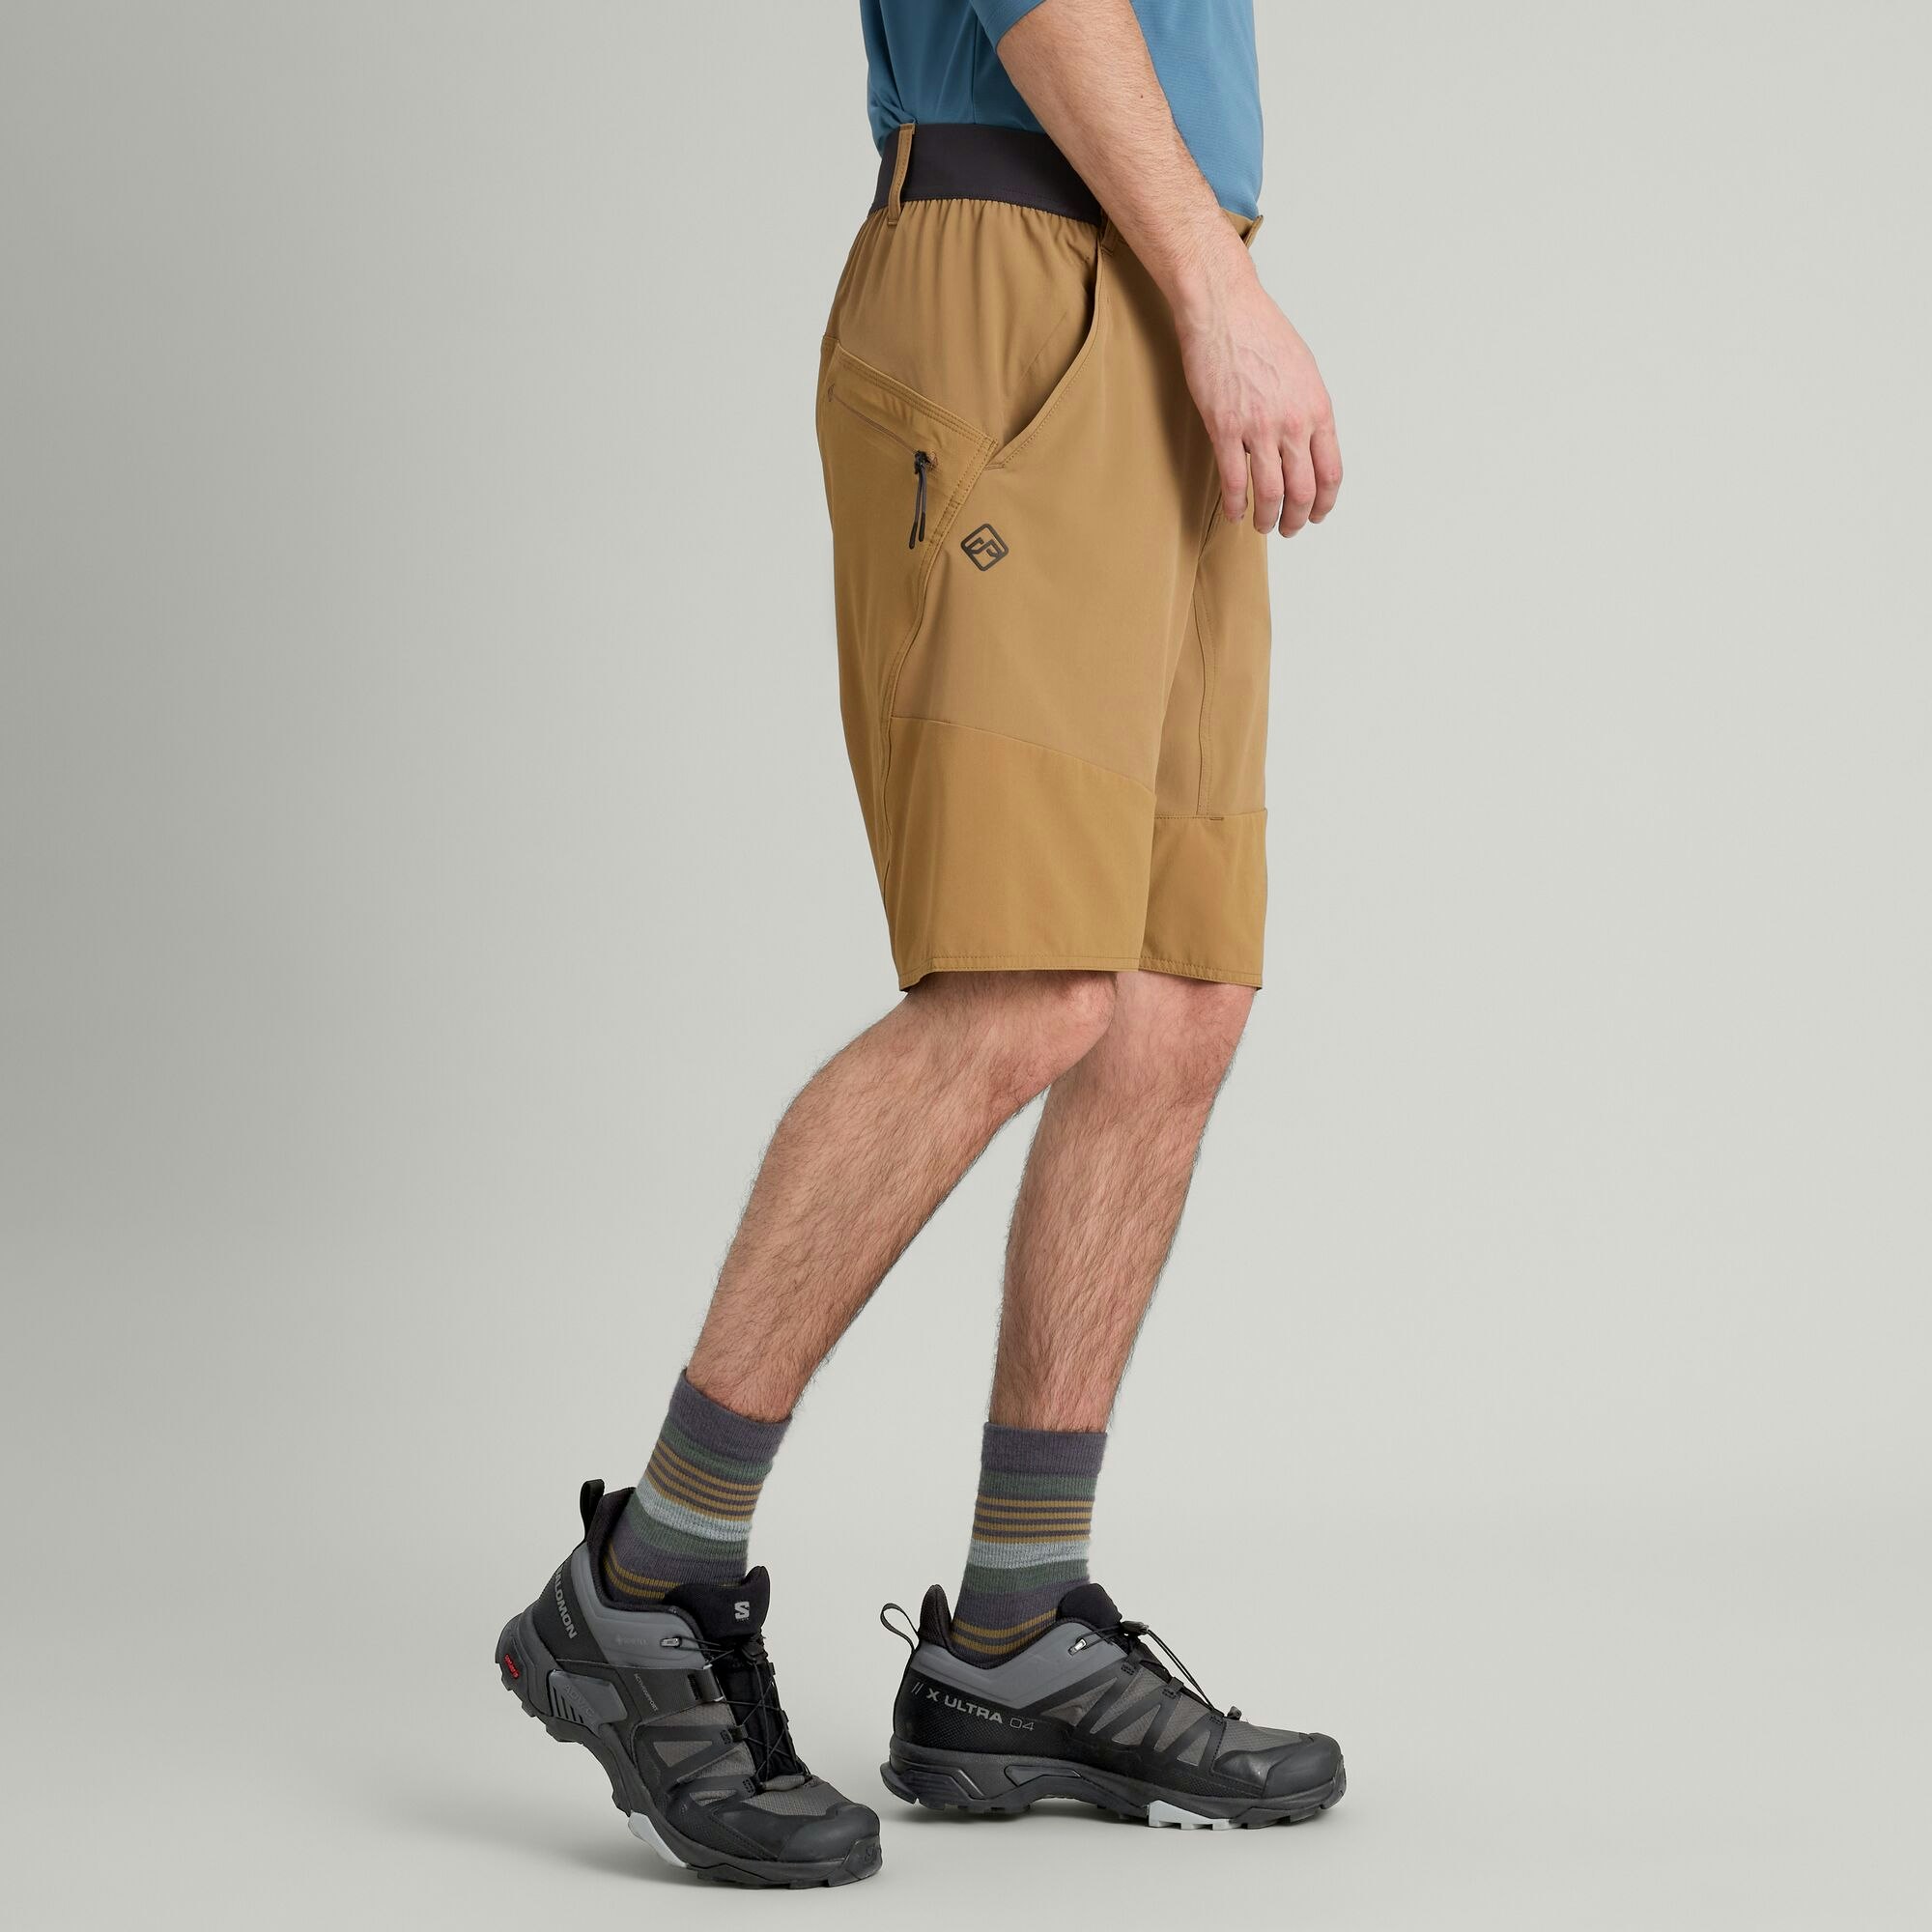 ULT-Hike Men's Convertible Pants